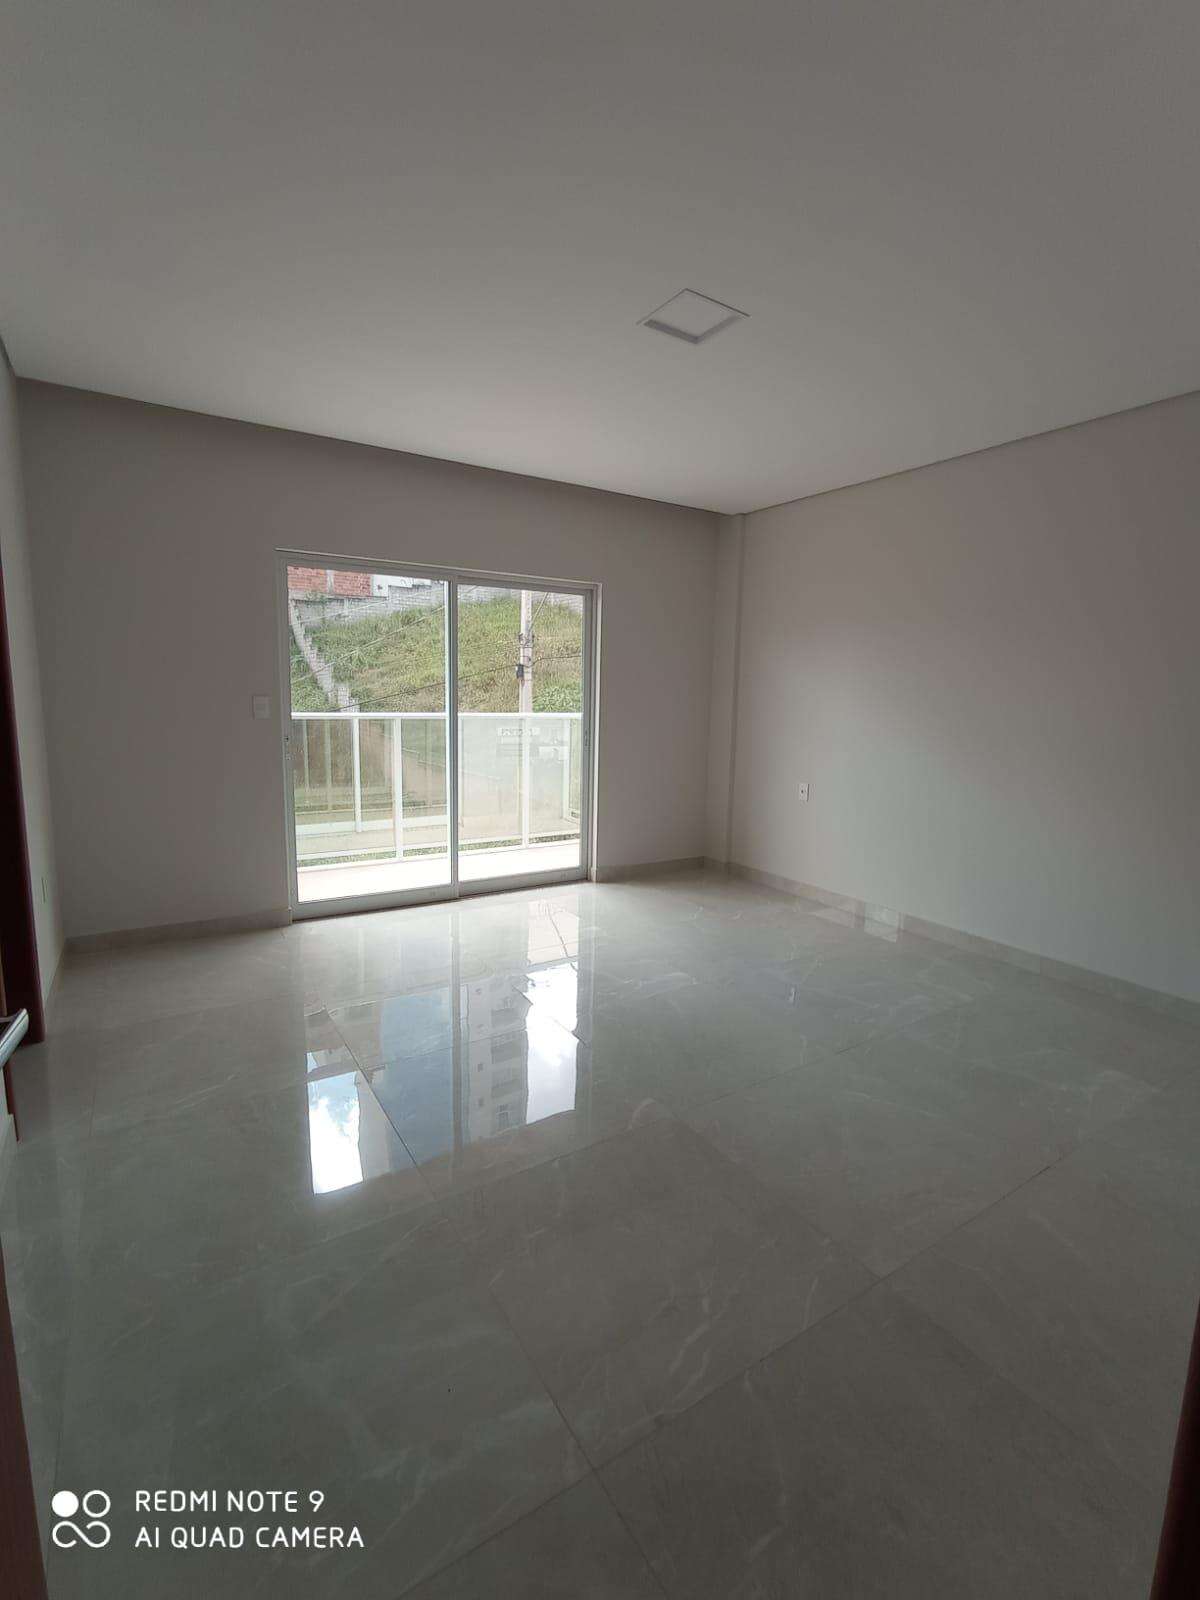 Apartamento 3 quartos para aluguel no Rafael José de Lima: 4b068f0f-1-whatsapp-image-2023-06-05-at-12.52.06.jpeg